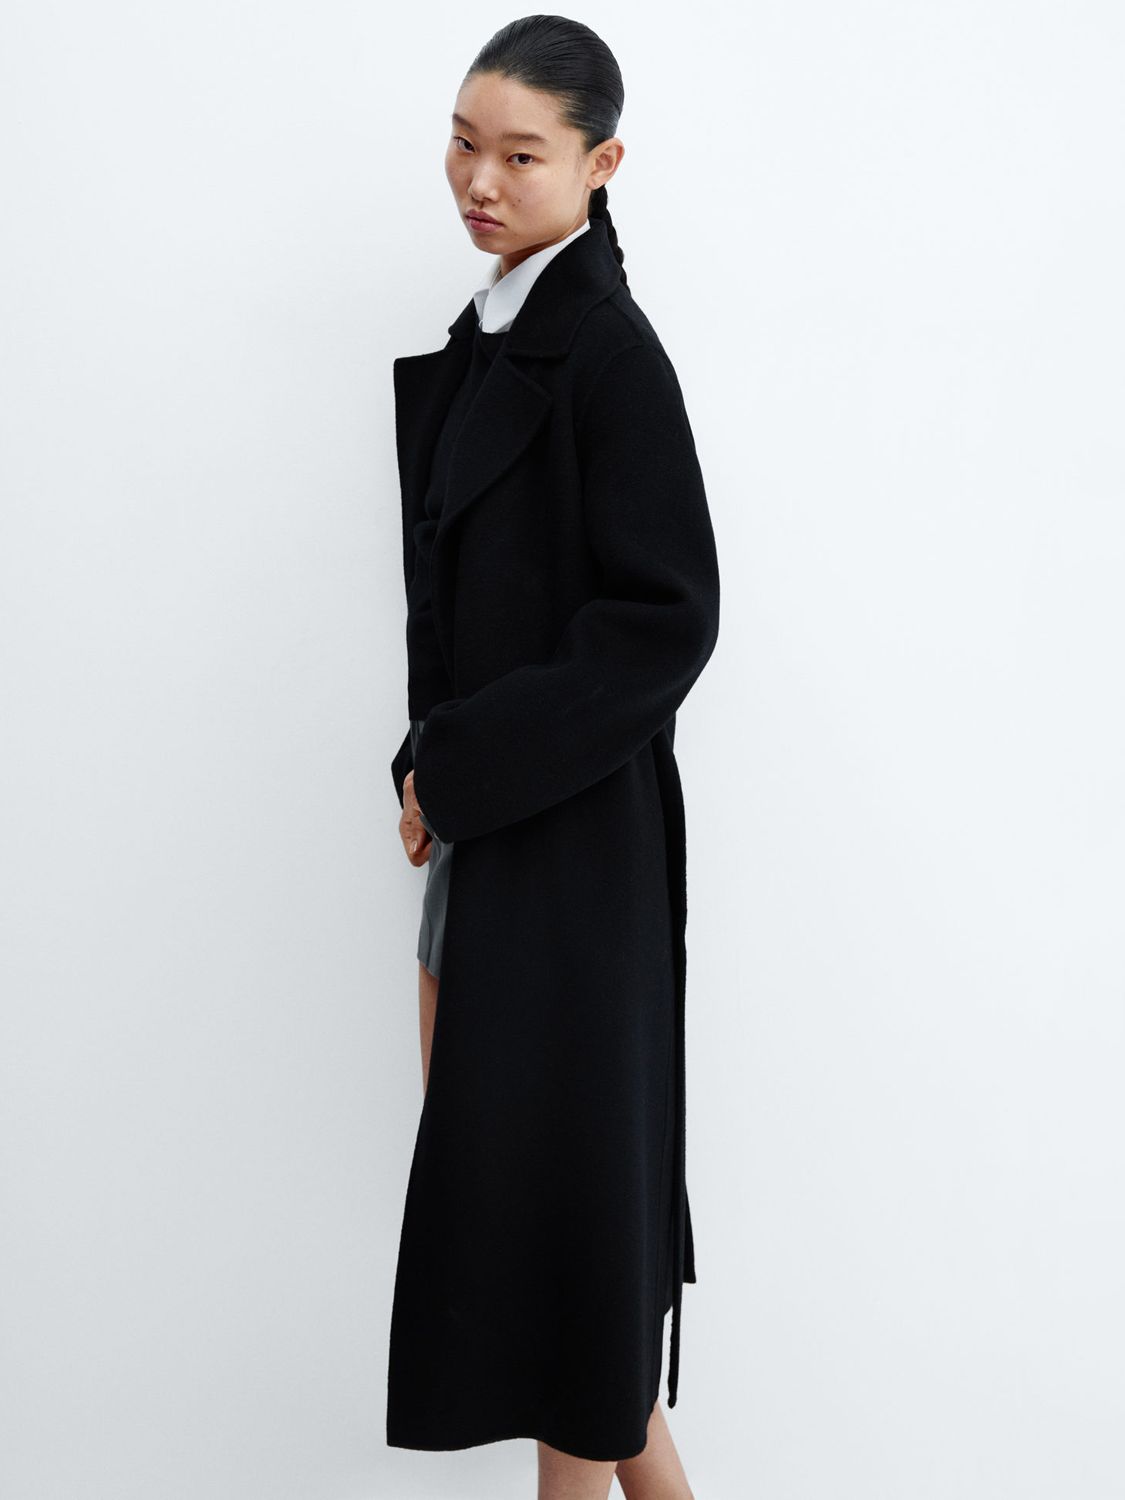 Mango London Wool Blend Coat,, Black at John Lewis & Partners